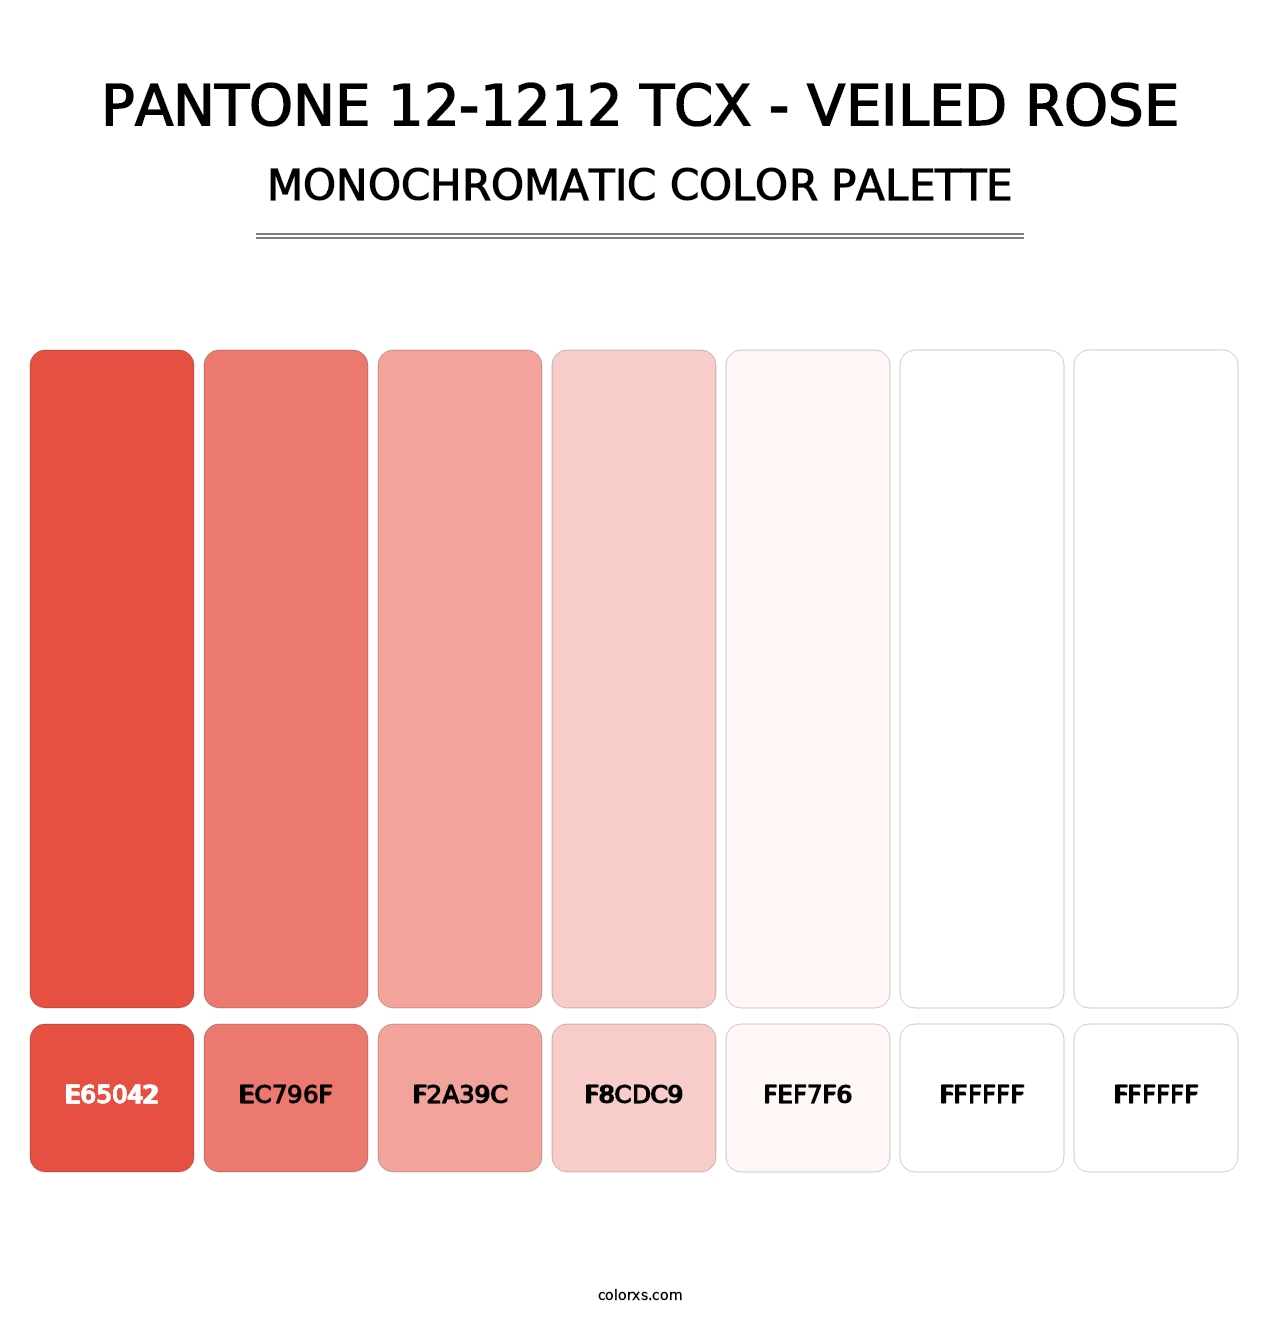 PANTONE 12-1212 TCX - Veiled Rose - Monochromatic Color Palette